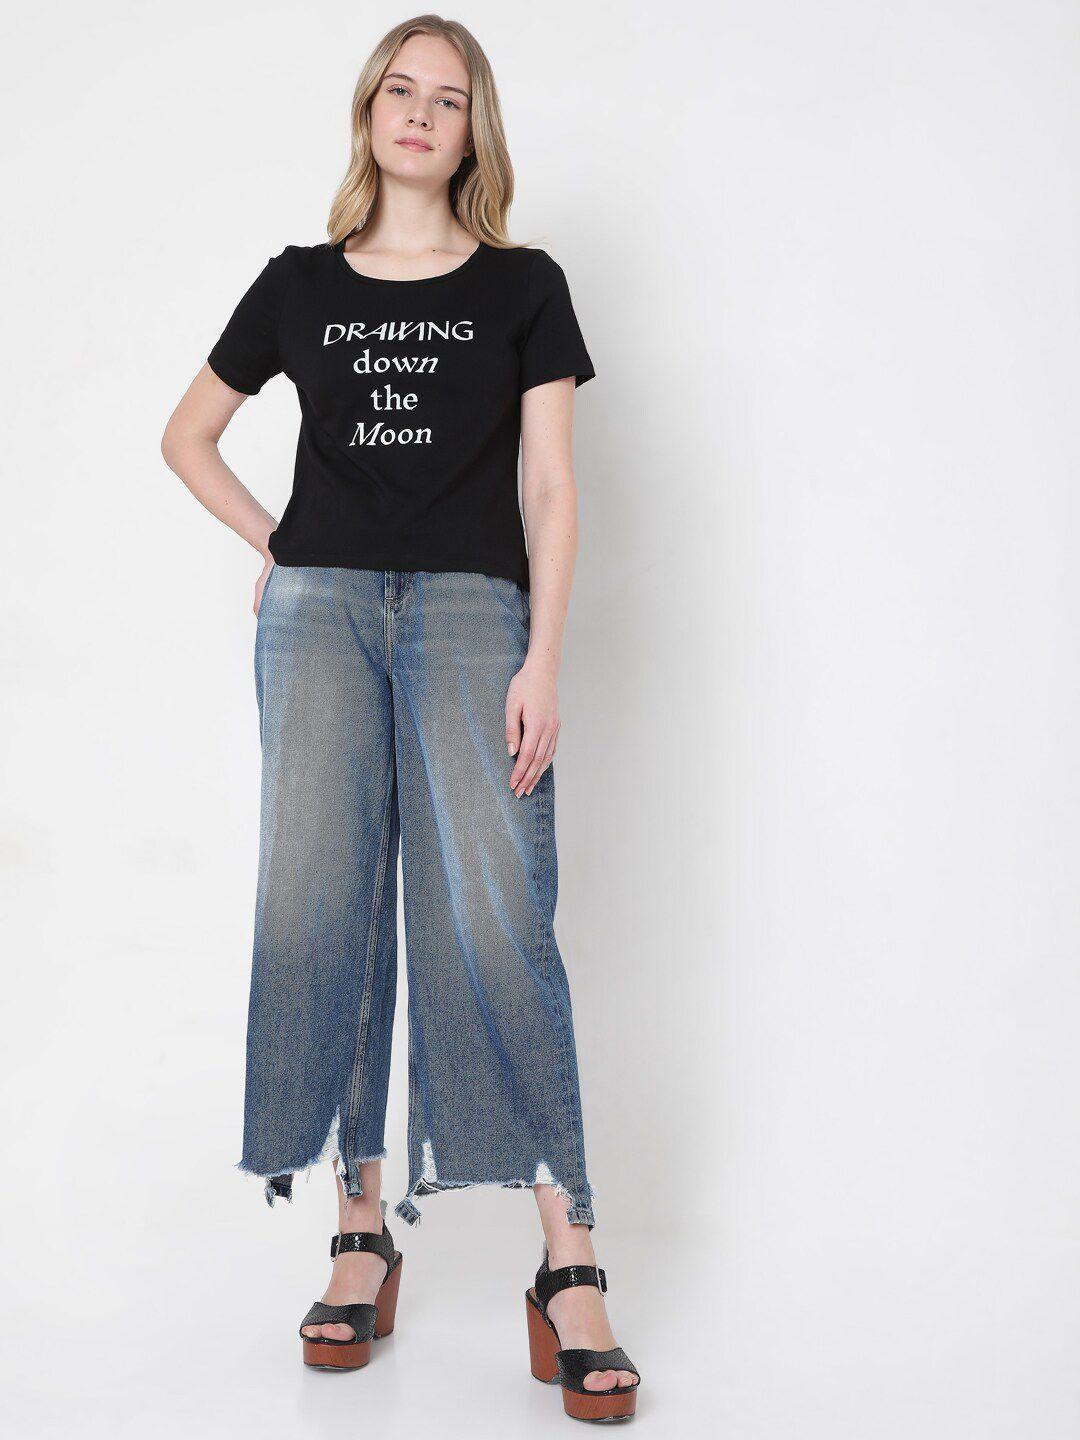 vero moda women black & white typography printed t-shirt